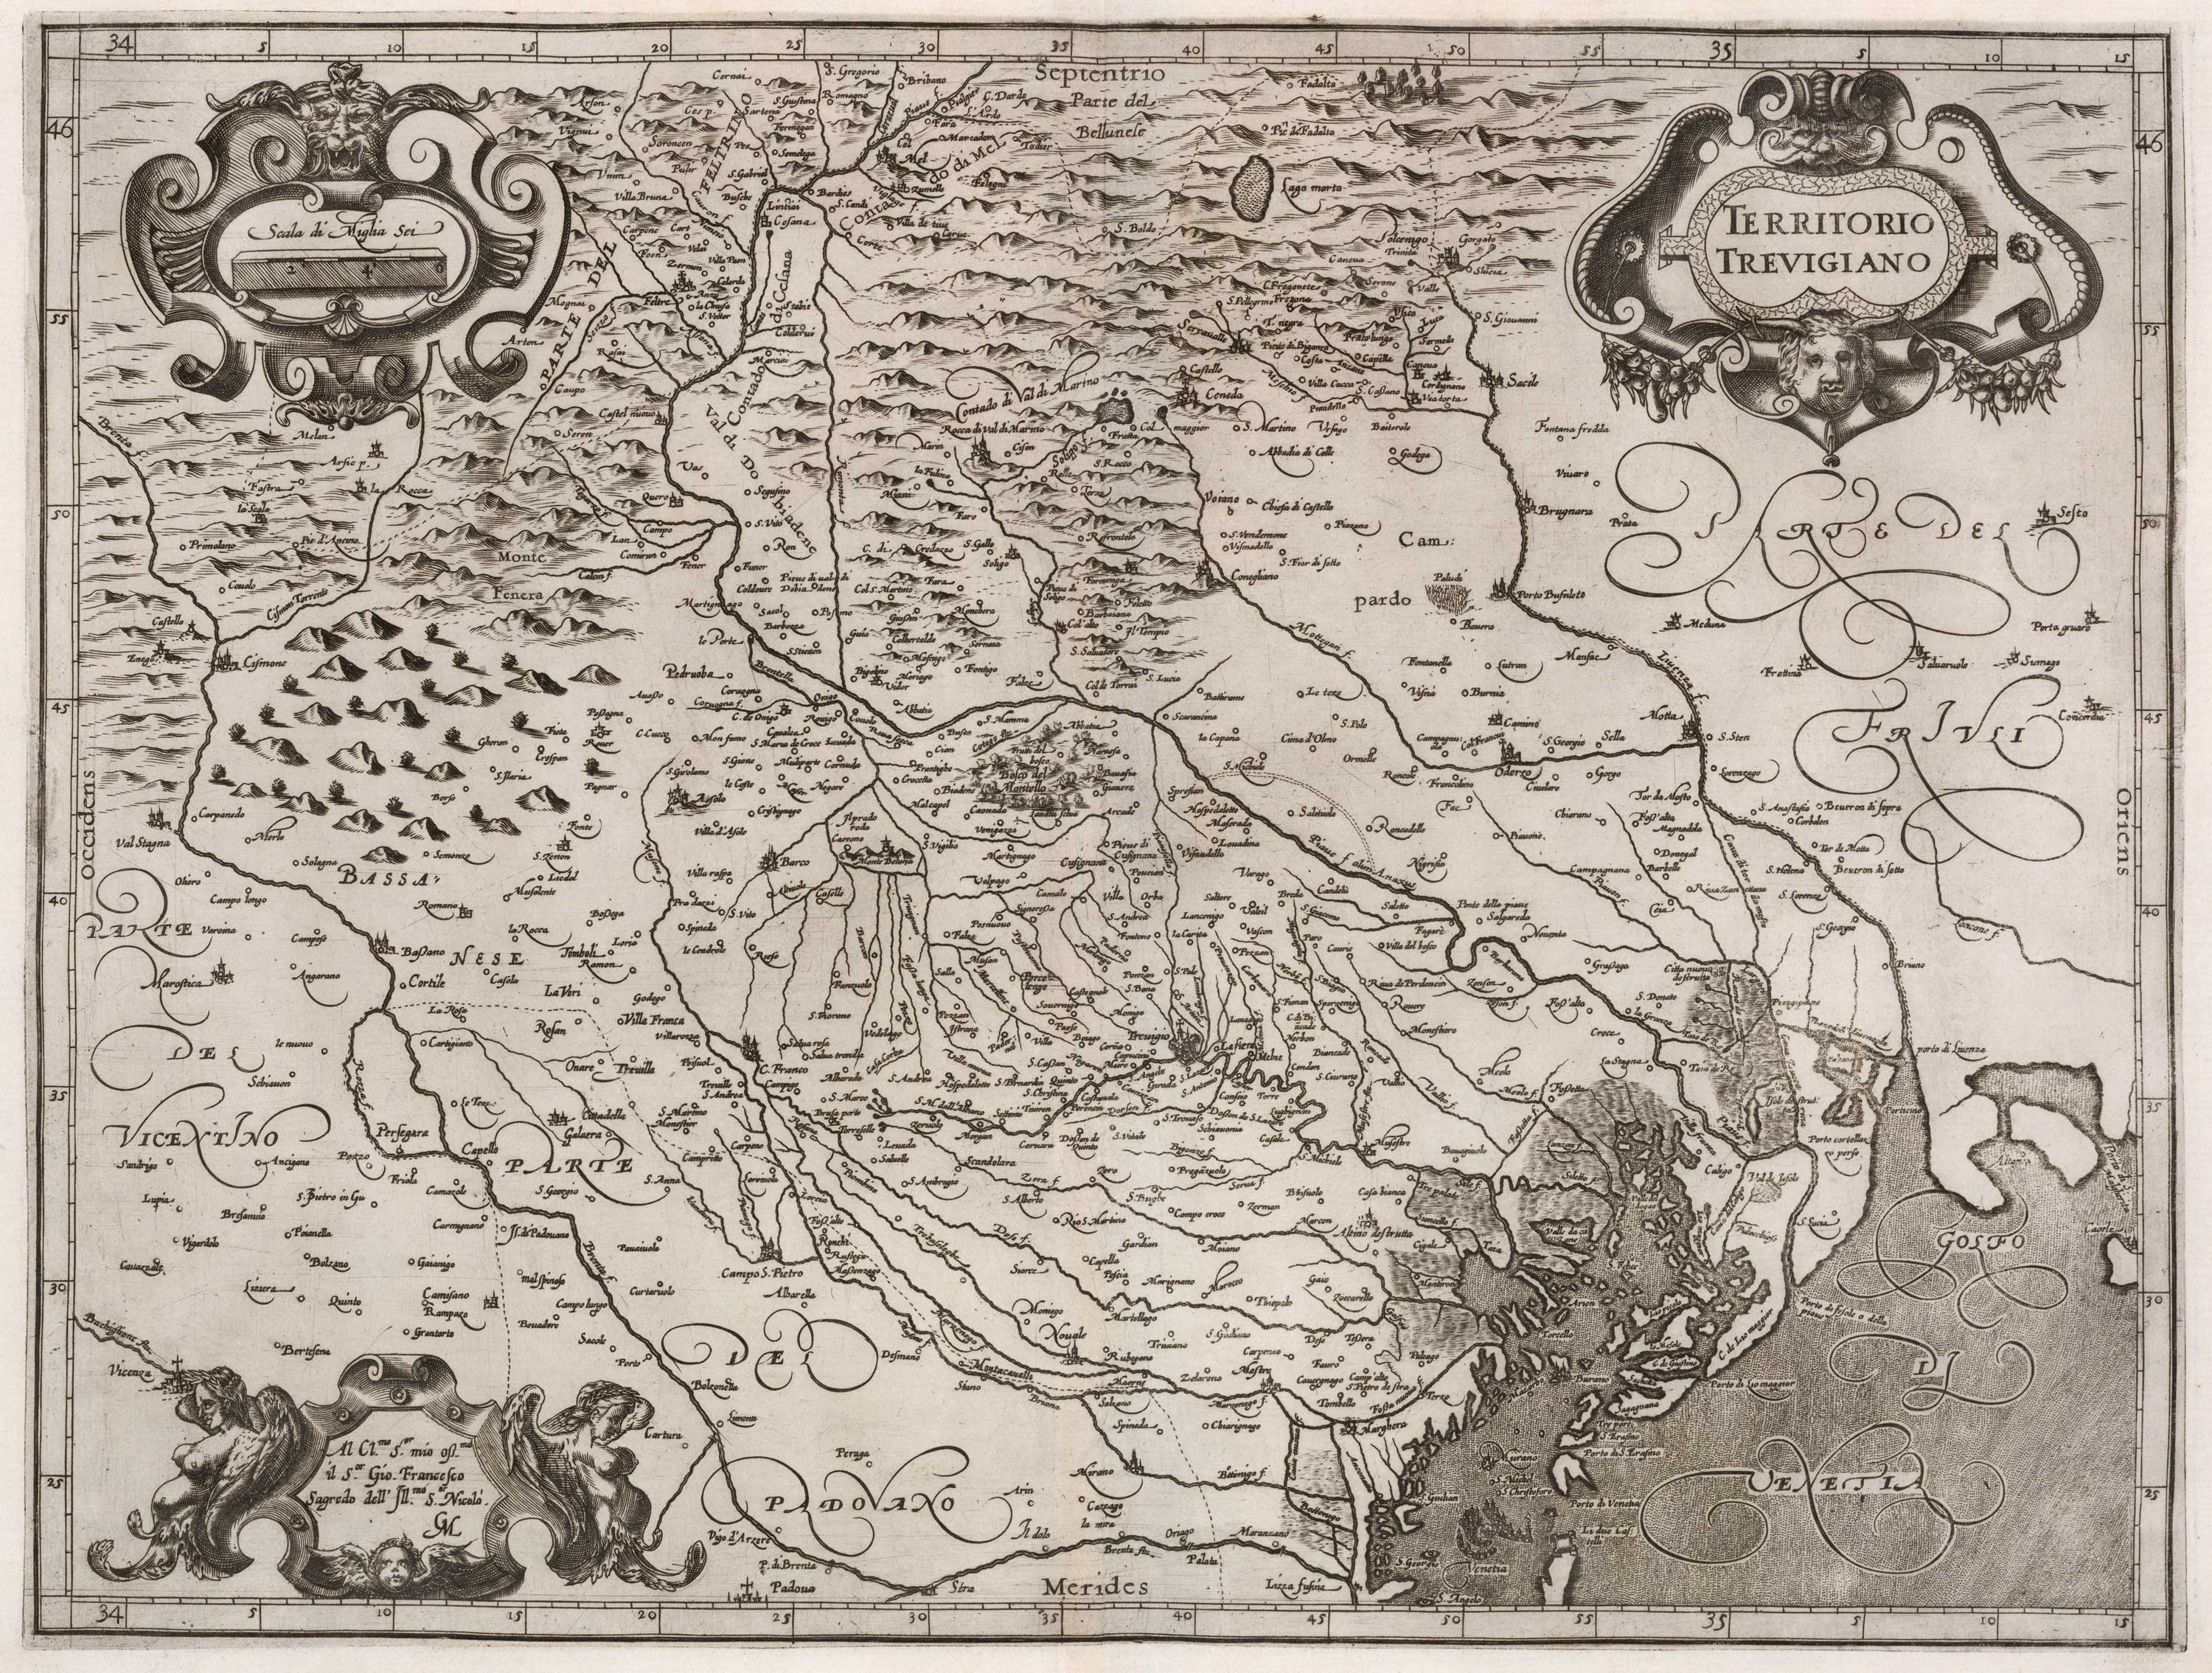 Territorio Trevigiano, 1620